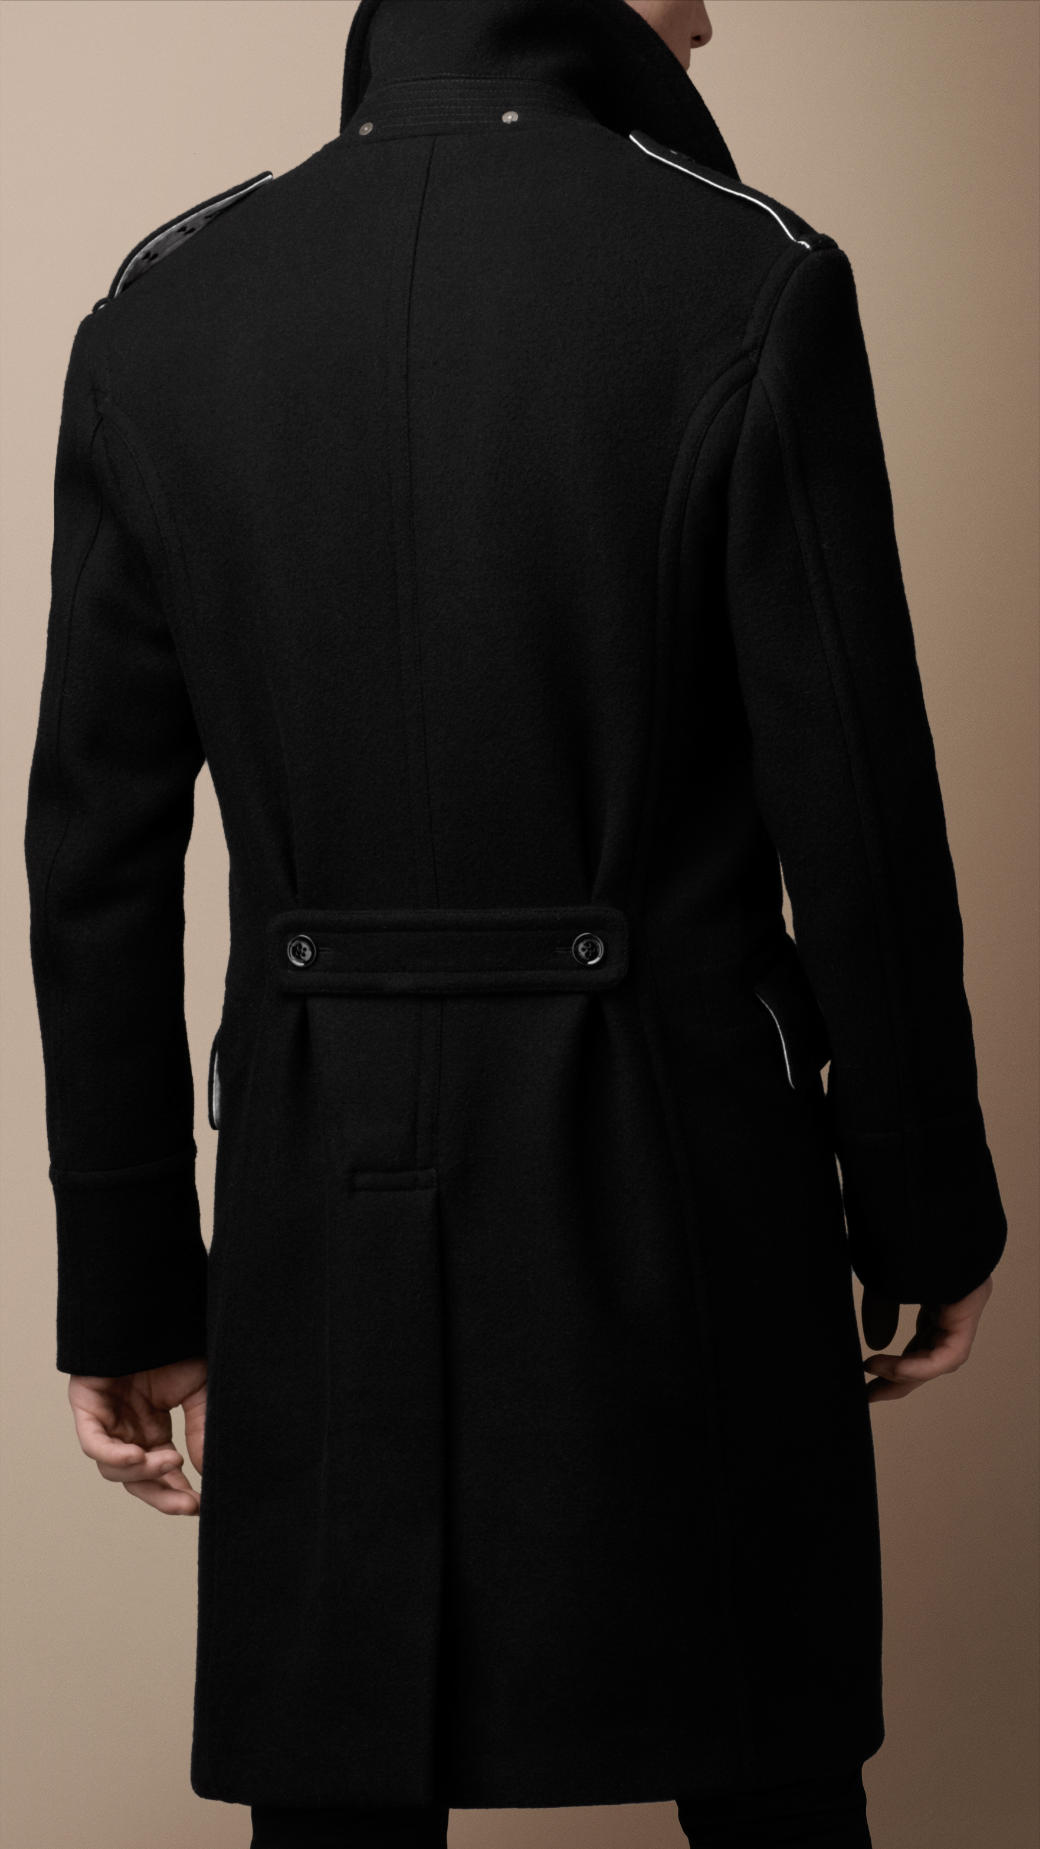 Lyst - Burberry Brit Oversized Wool Blend Great Coat in Black for Men